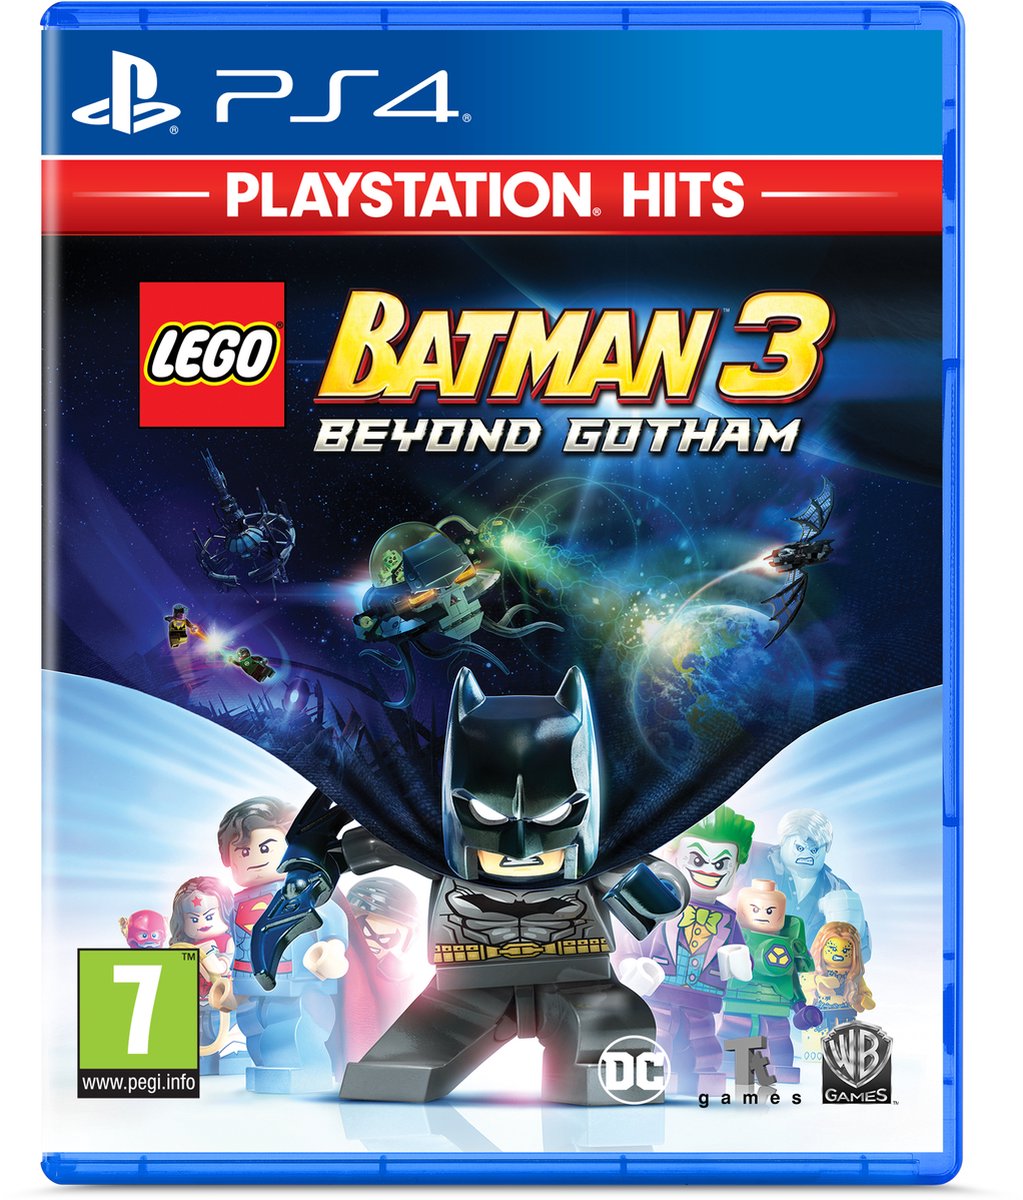 LEGO Batman 3: Beyond Gotham - PS4 Hits - Warner Bros. Games